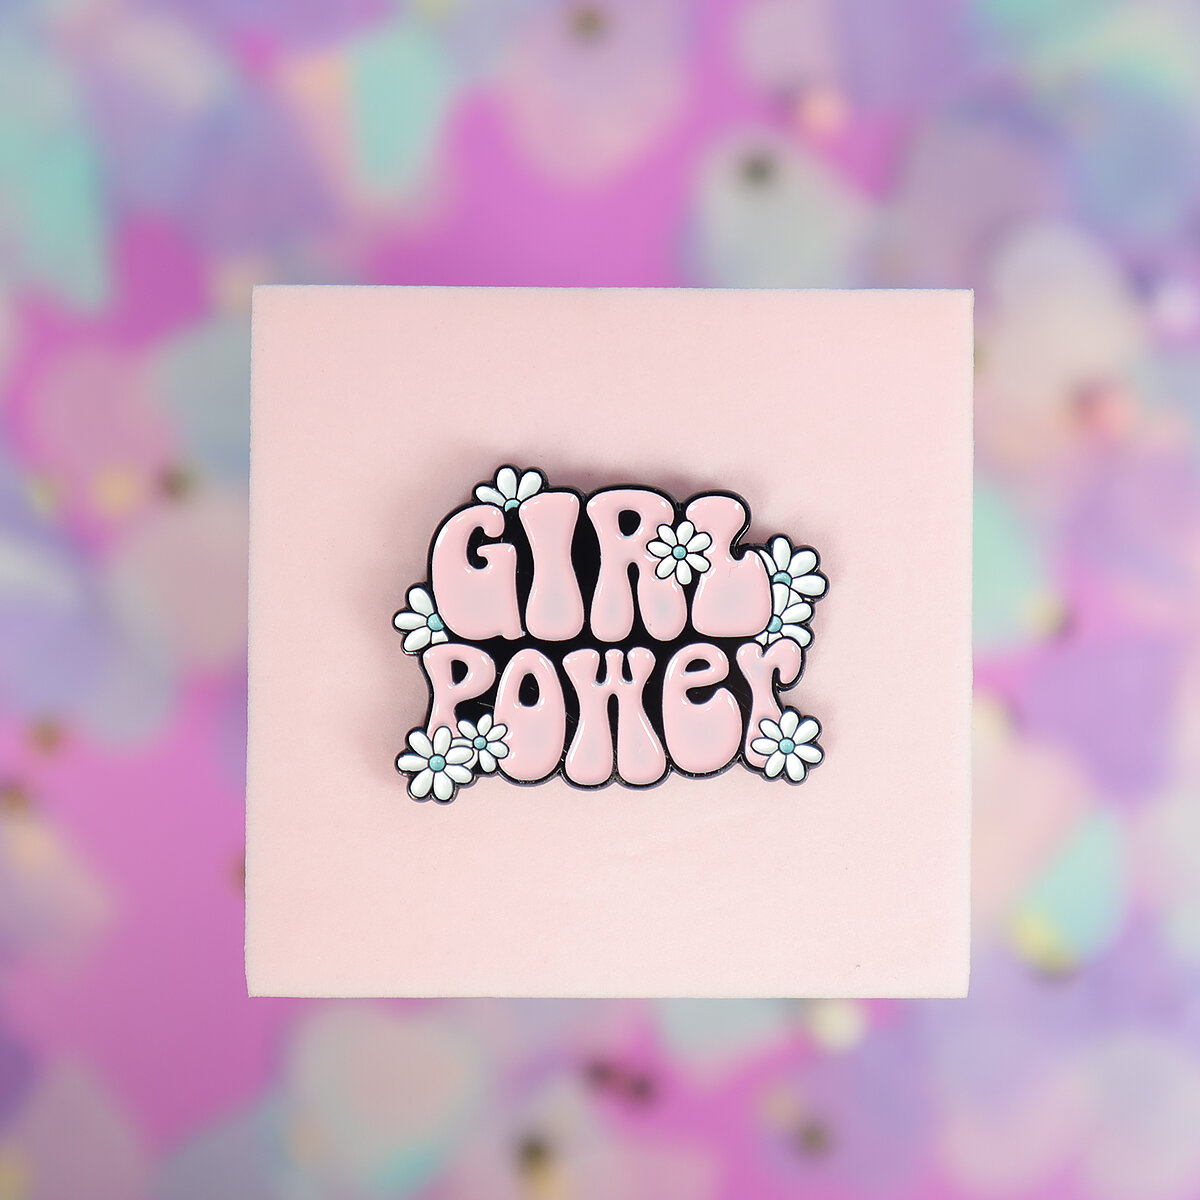 Pin - Girl power